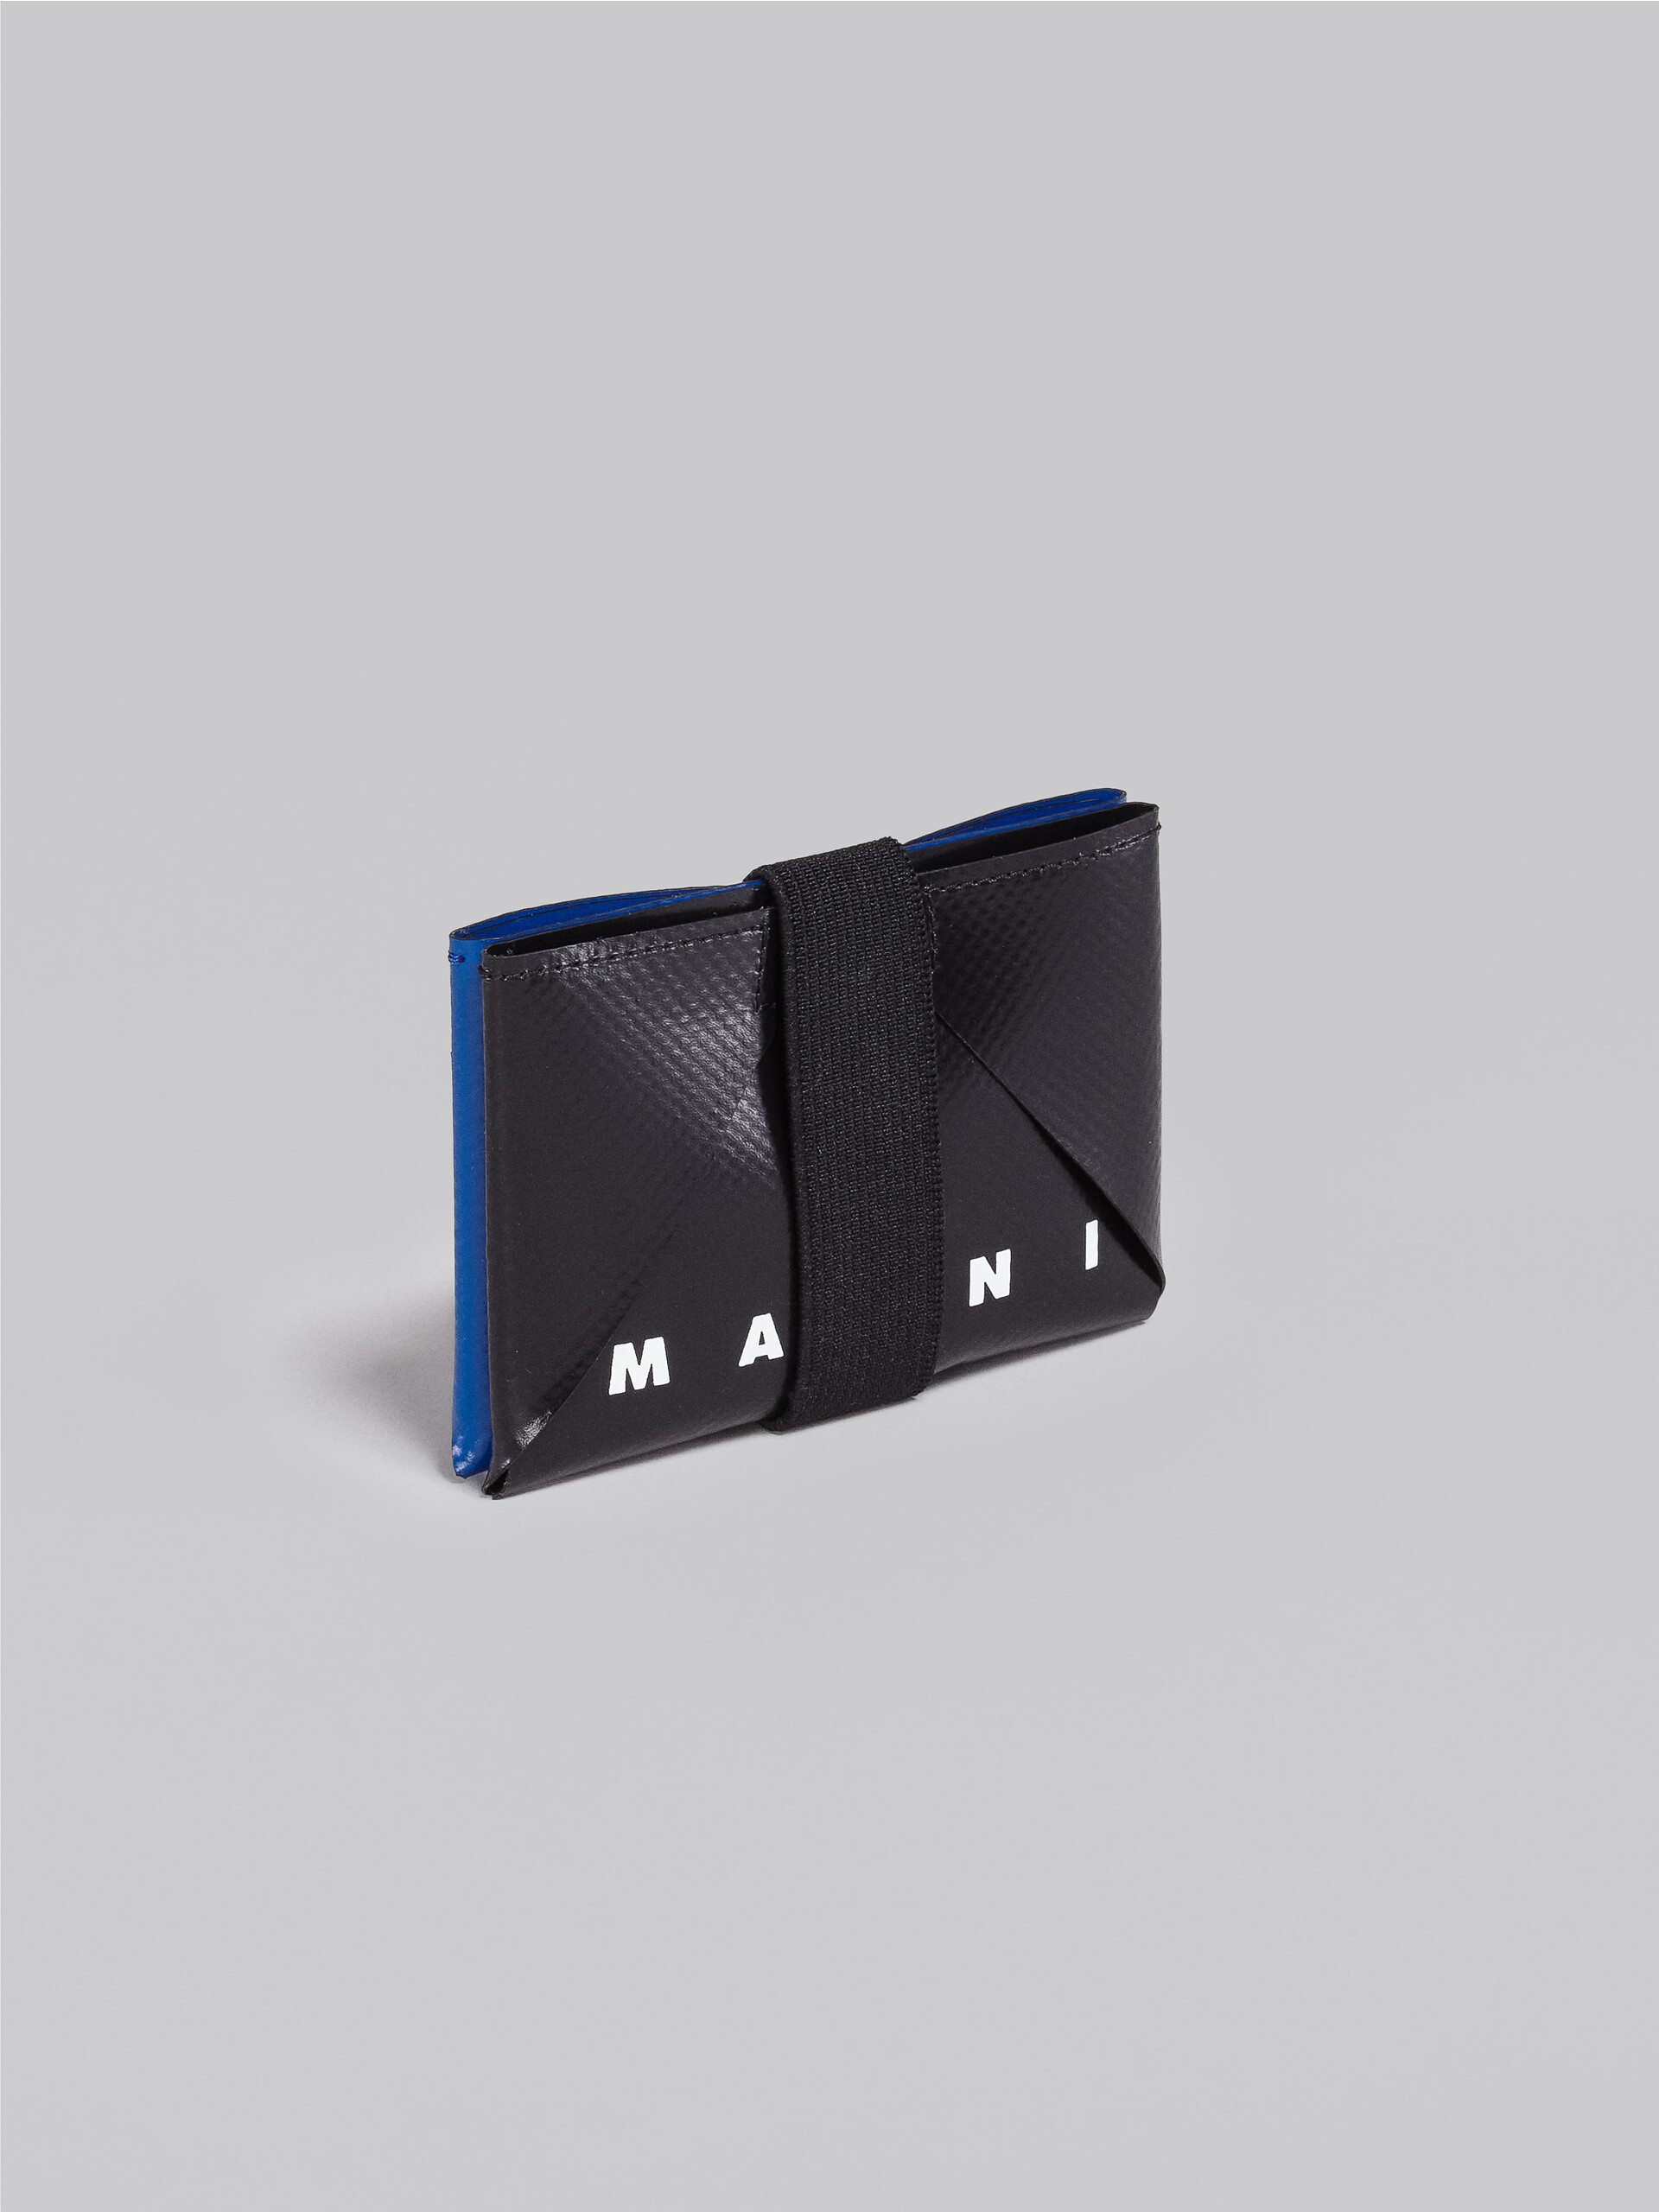 Black and blue credit card case - Wallets - Image 3